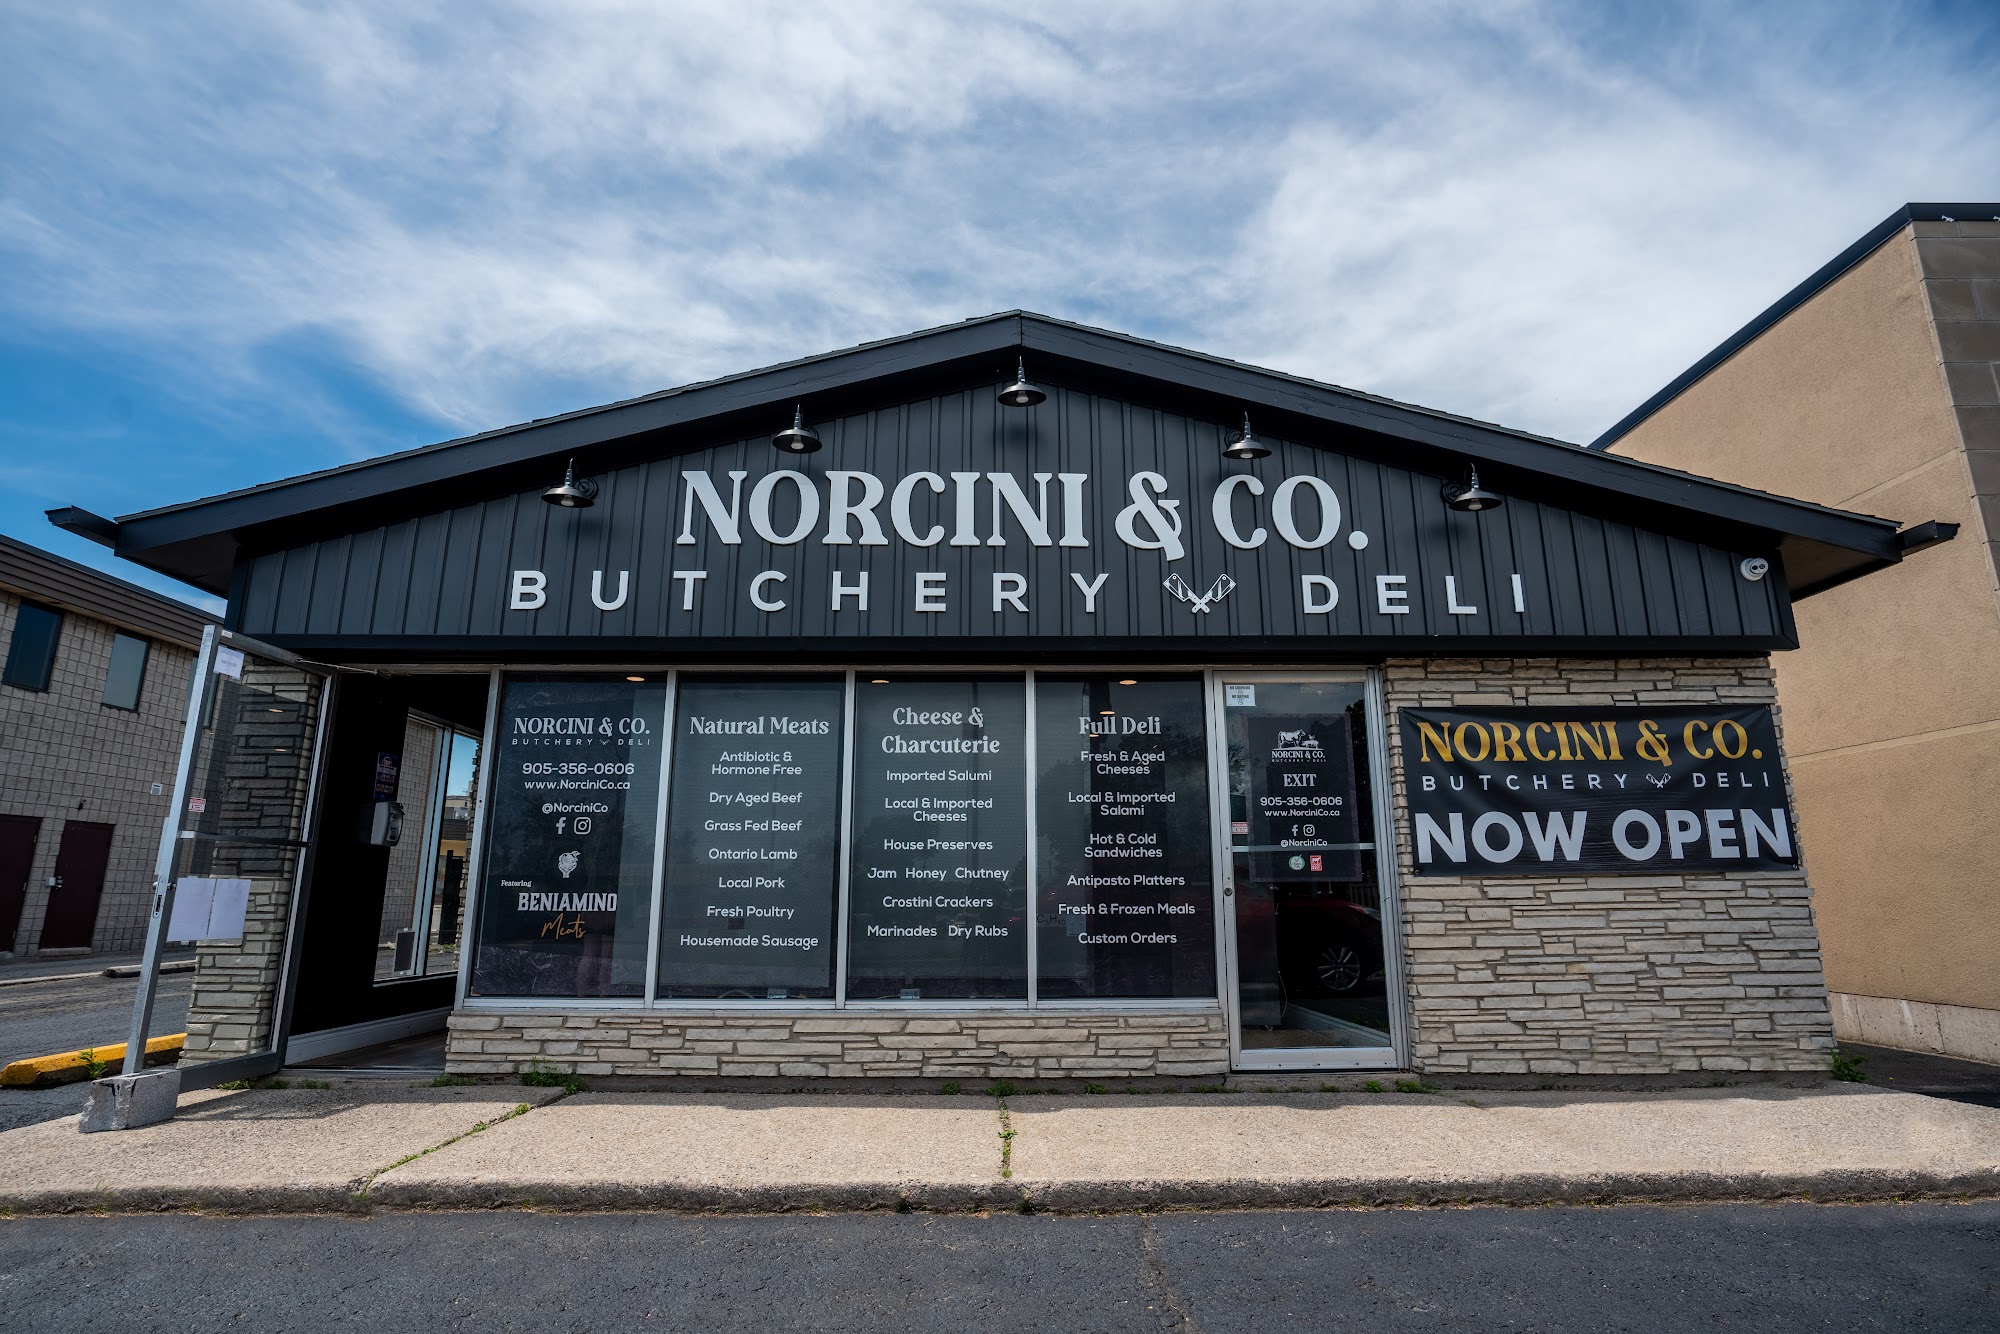 Norcini & Co. Butchery & Deli